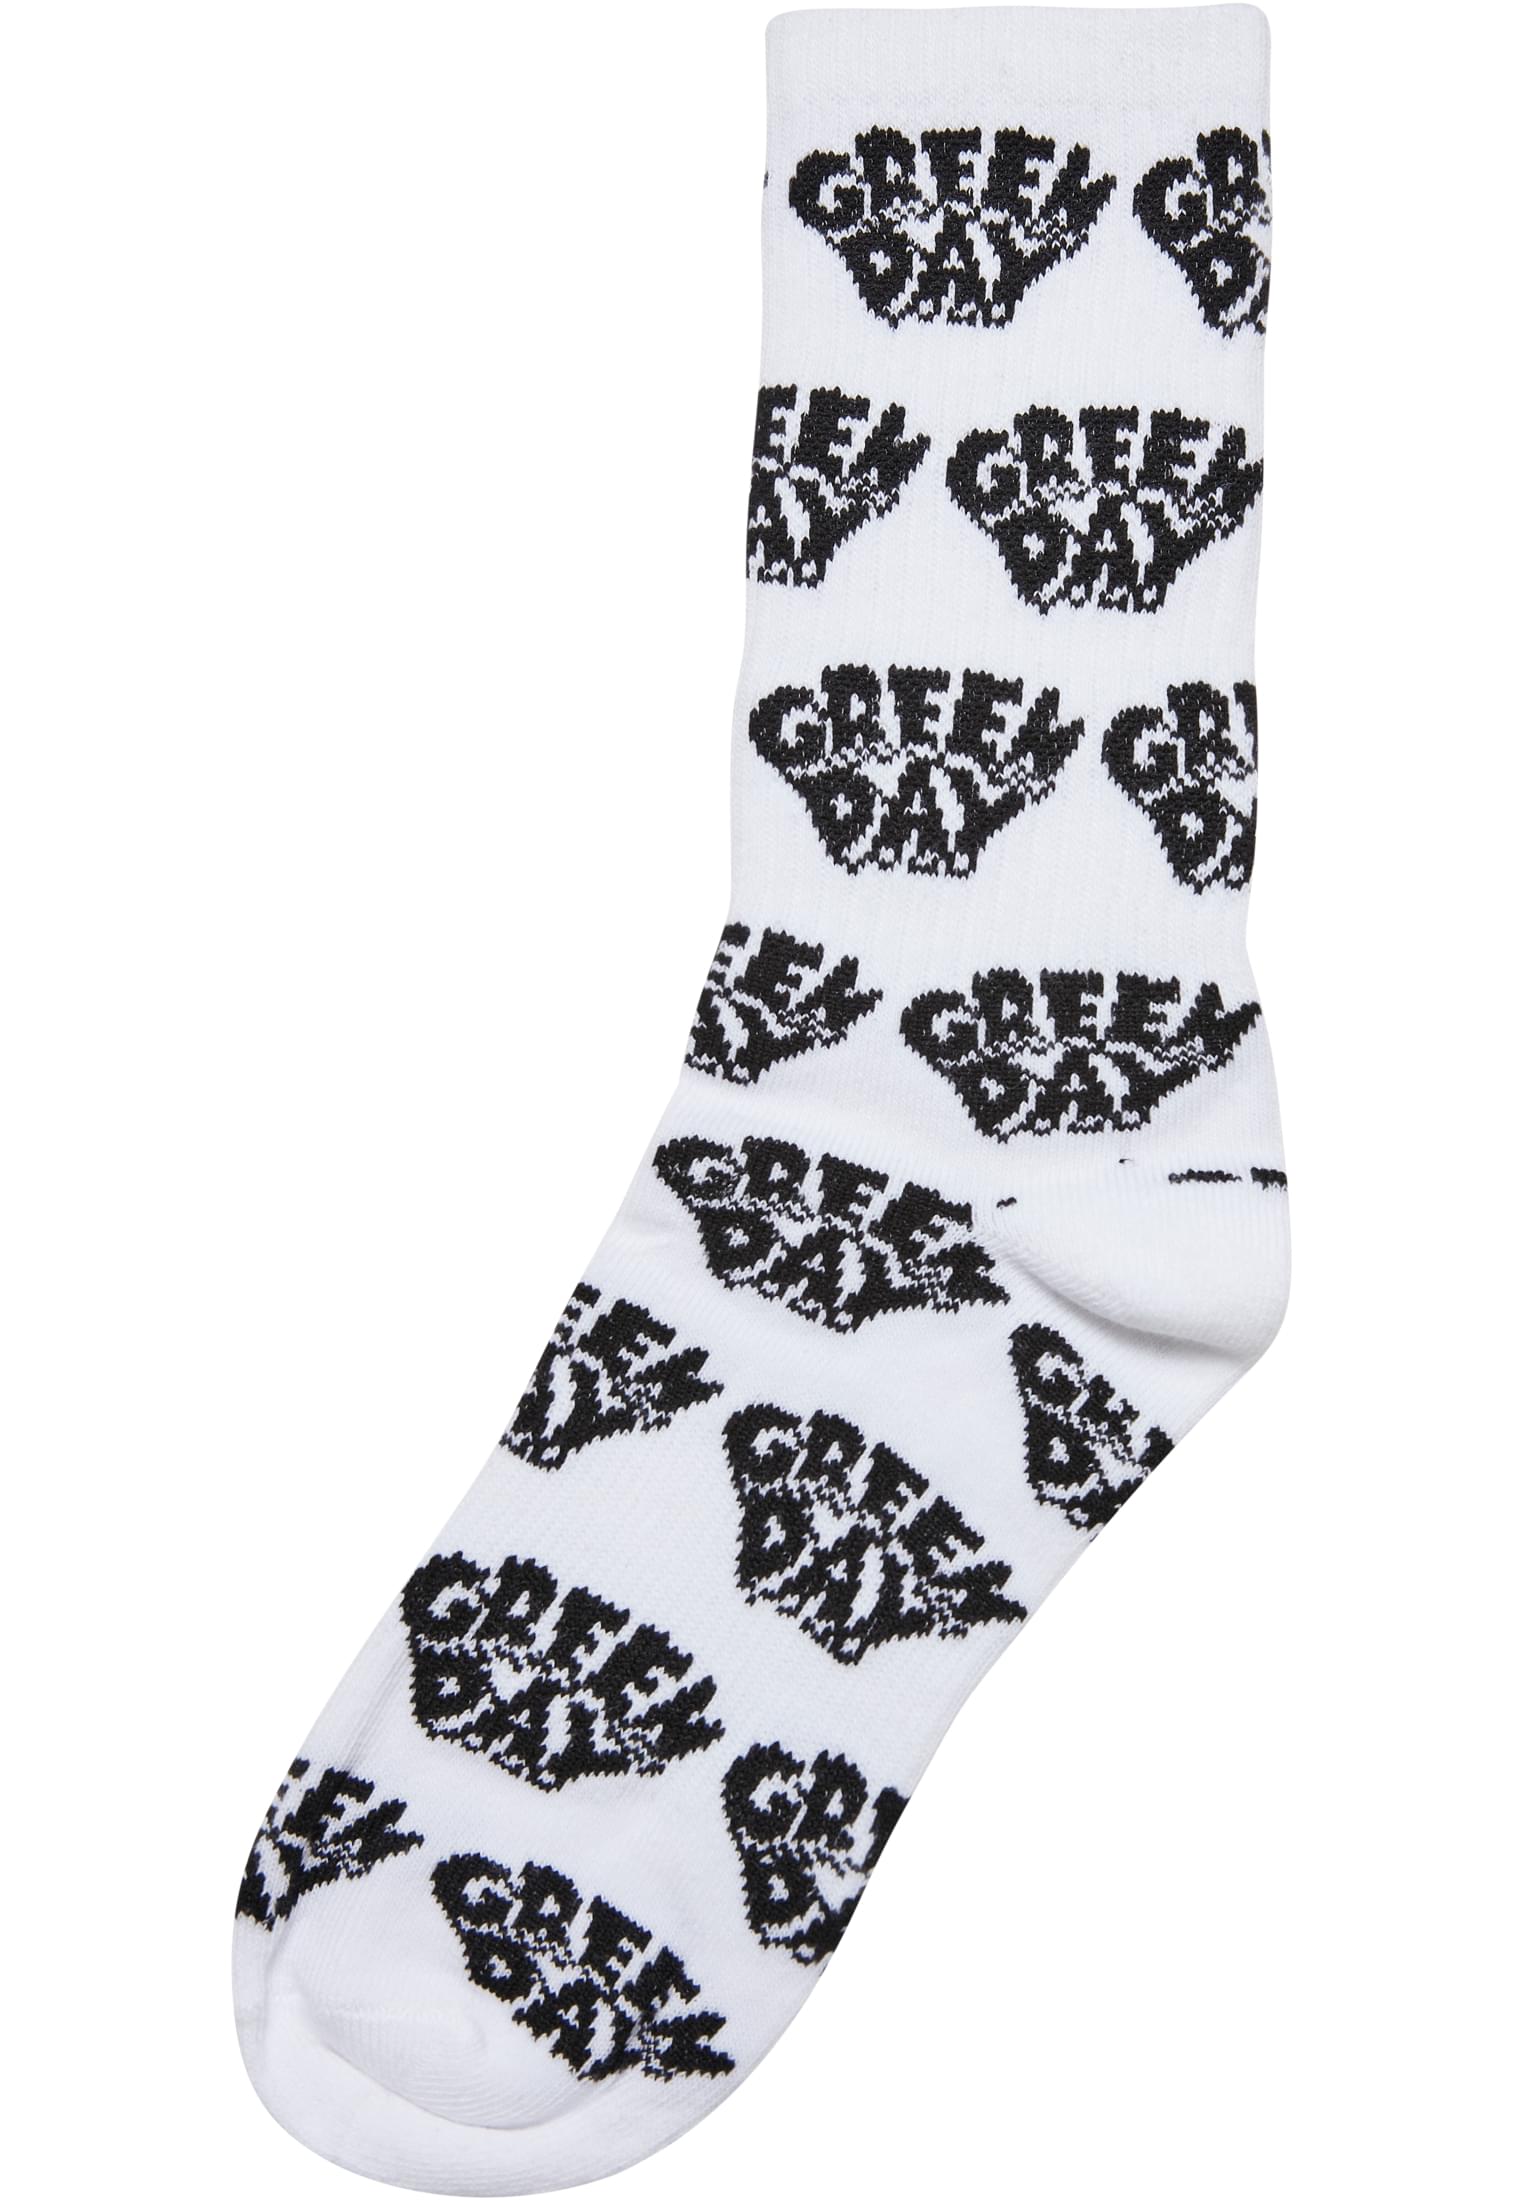 Accessoires Green Day Socks 2-Pack in Farbe black/white